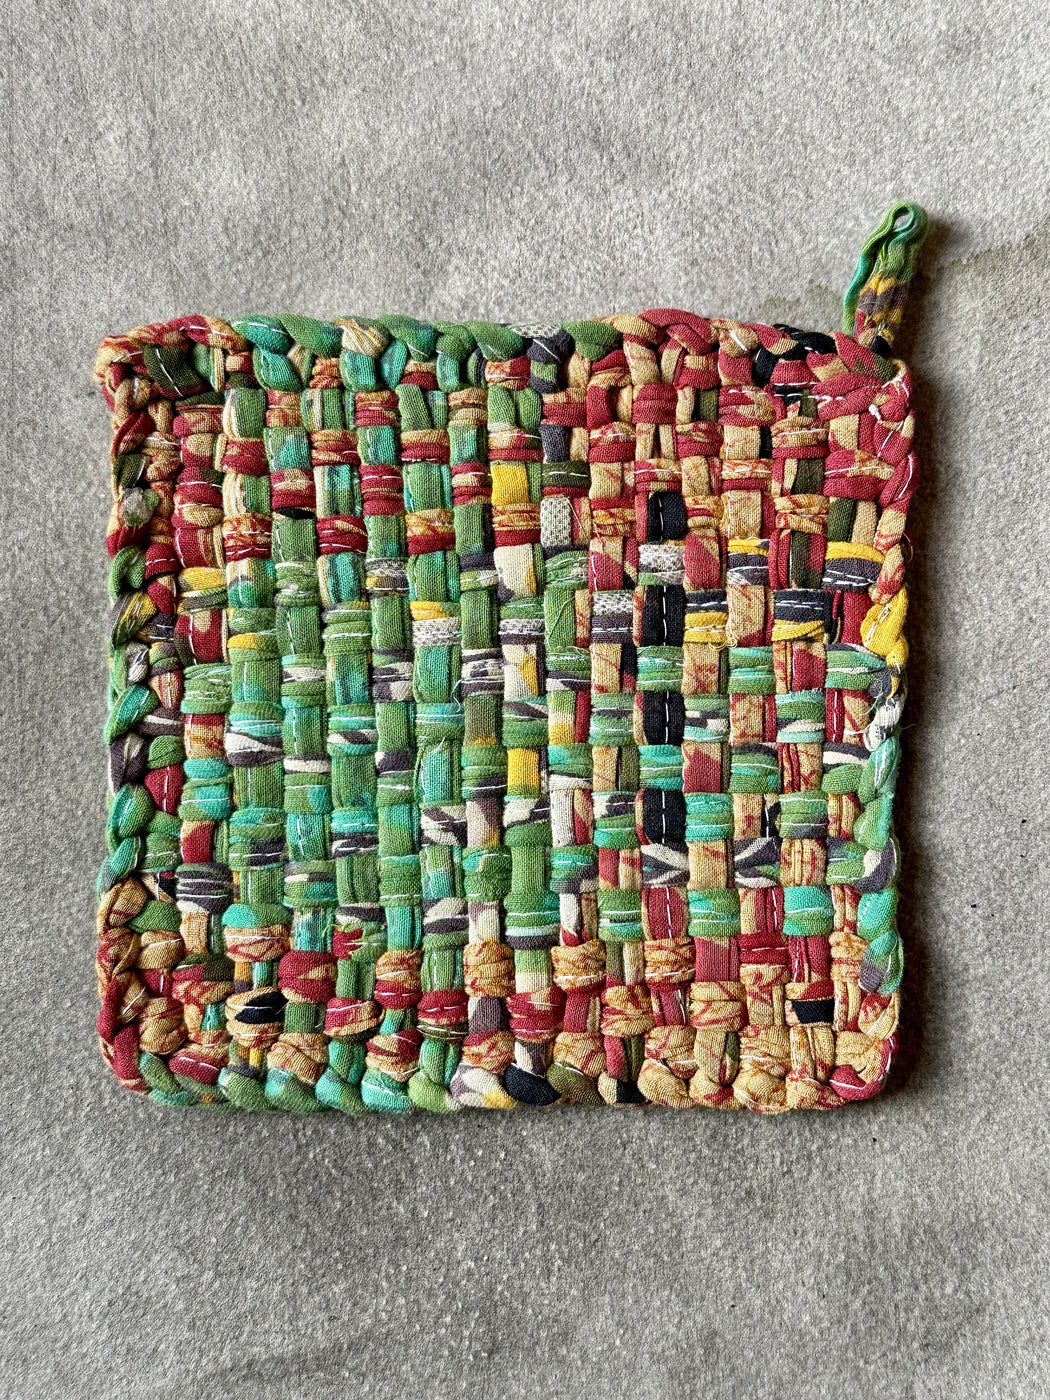 Woven Cotton Sari Potholders - Marigold and Green